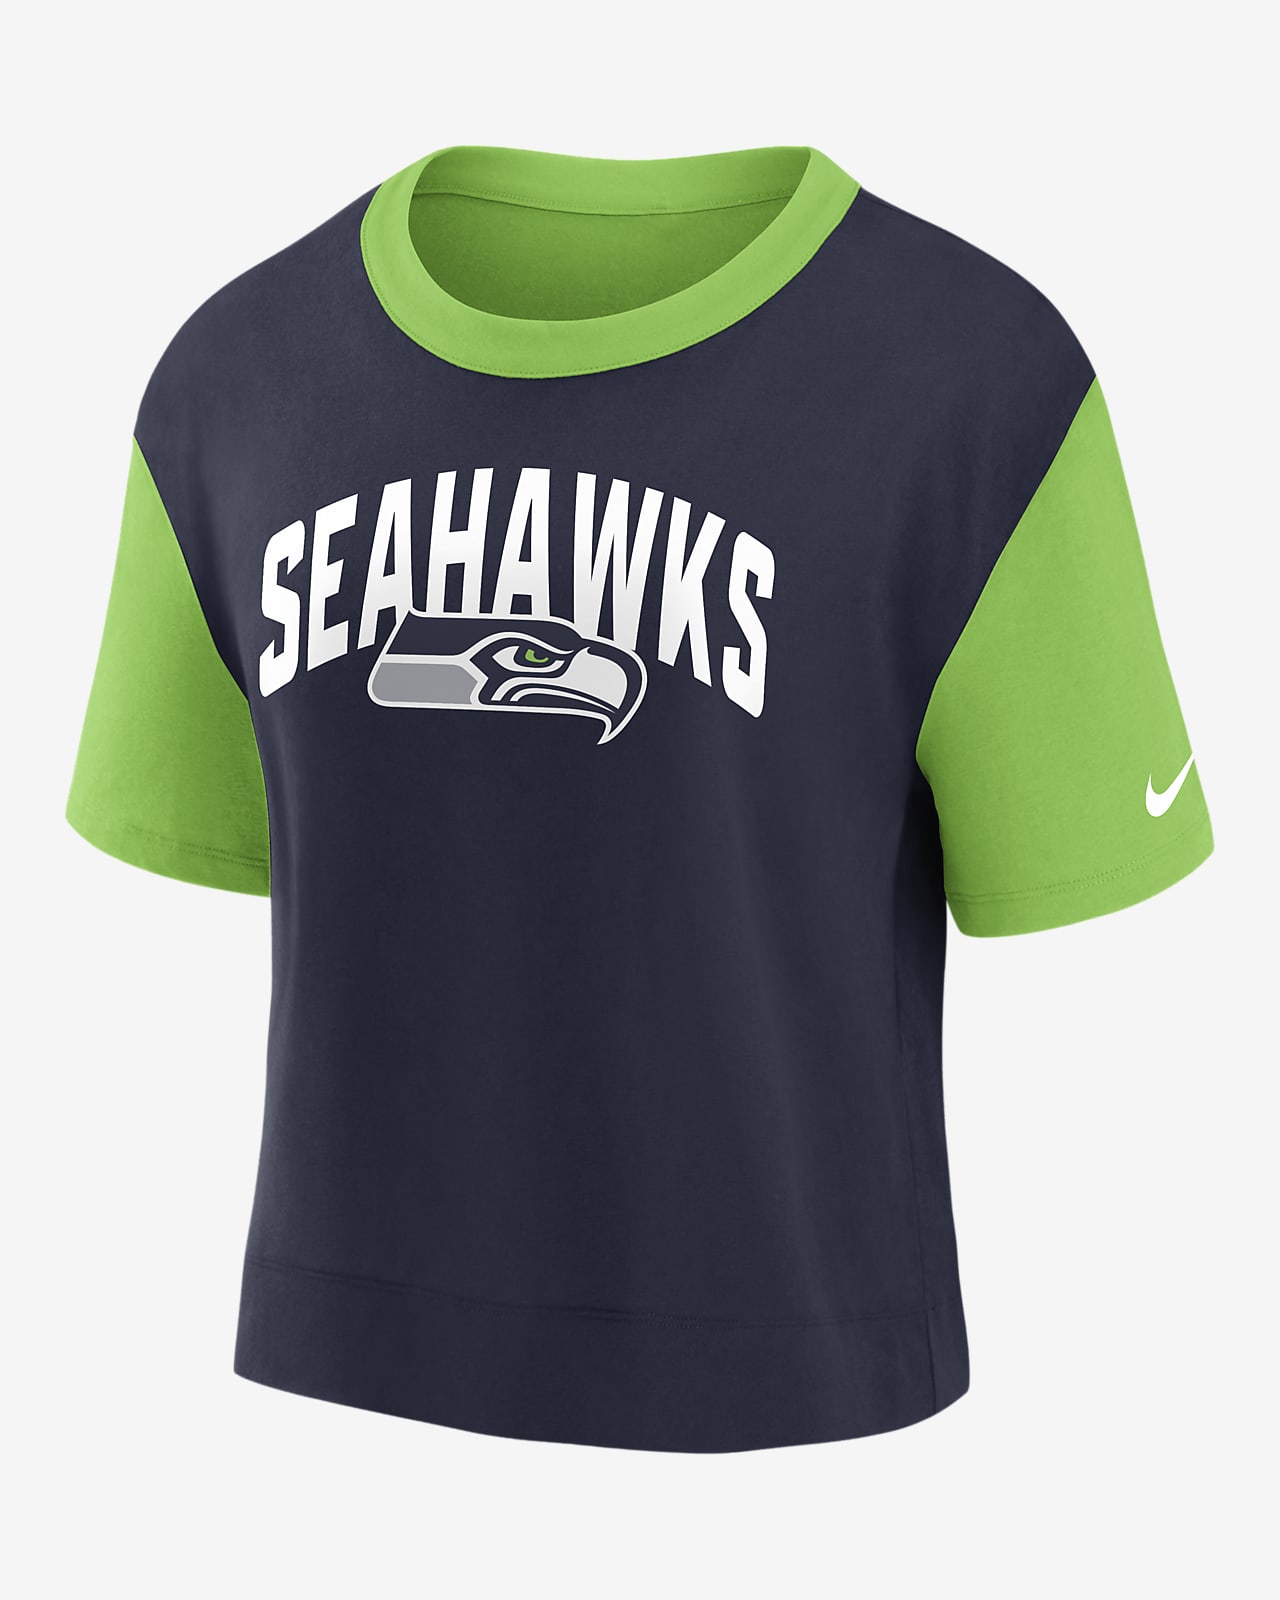 seattle seahawks tshirt